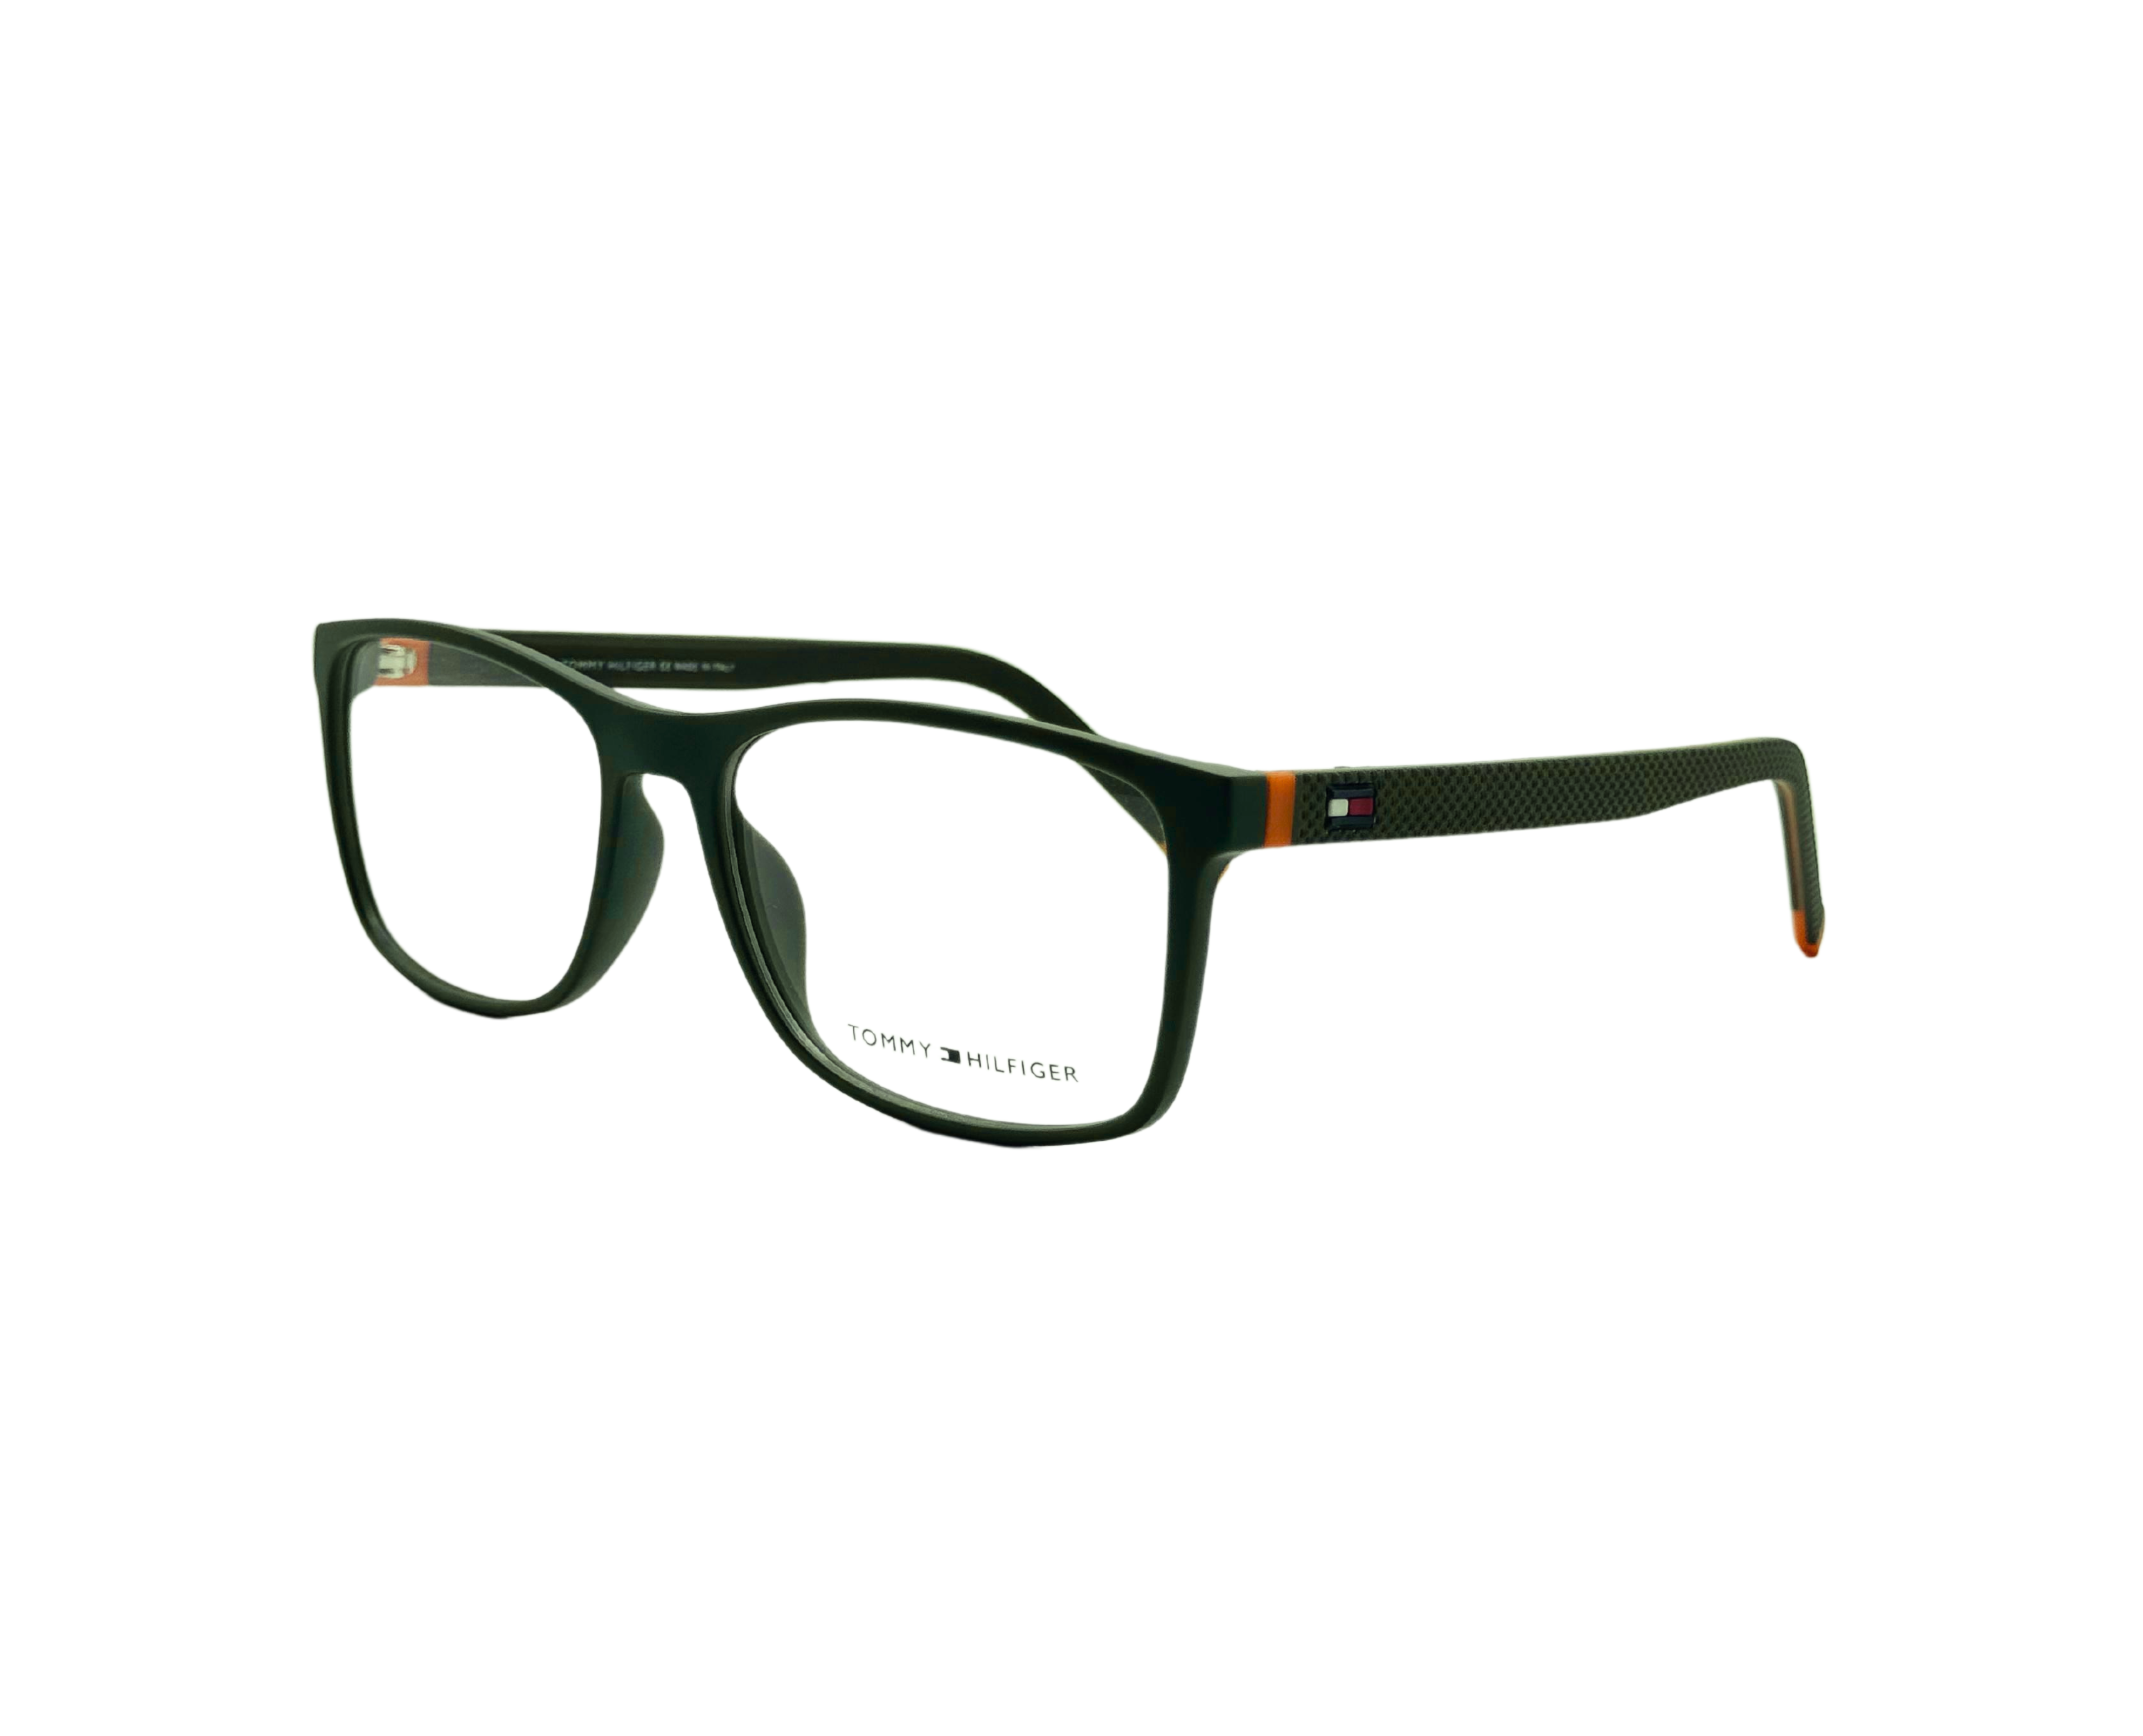 NS Luxury - 1785 - Green - Eyeglasses